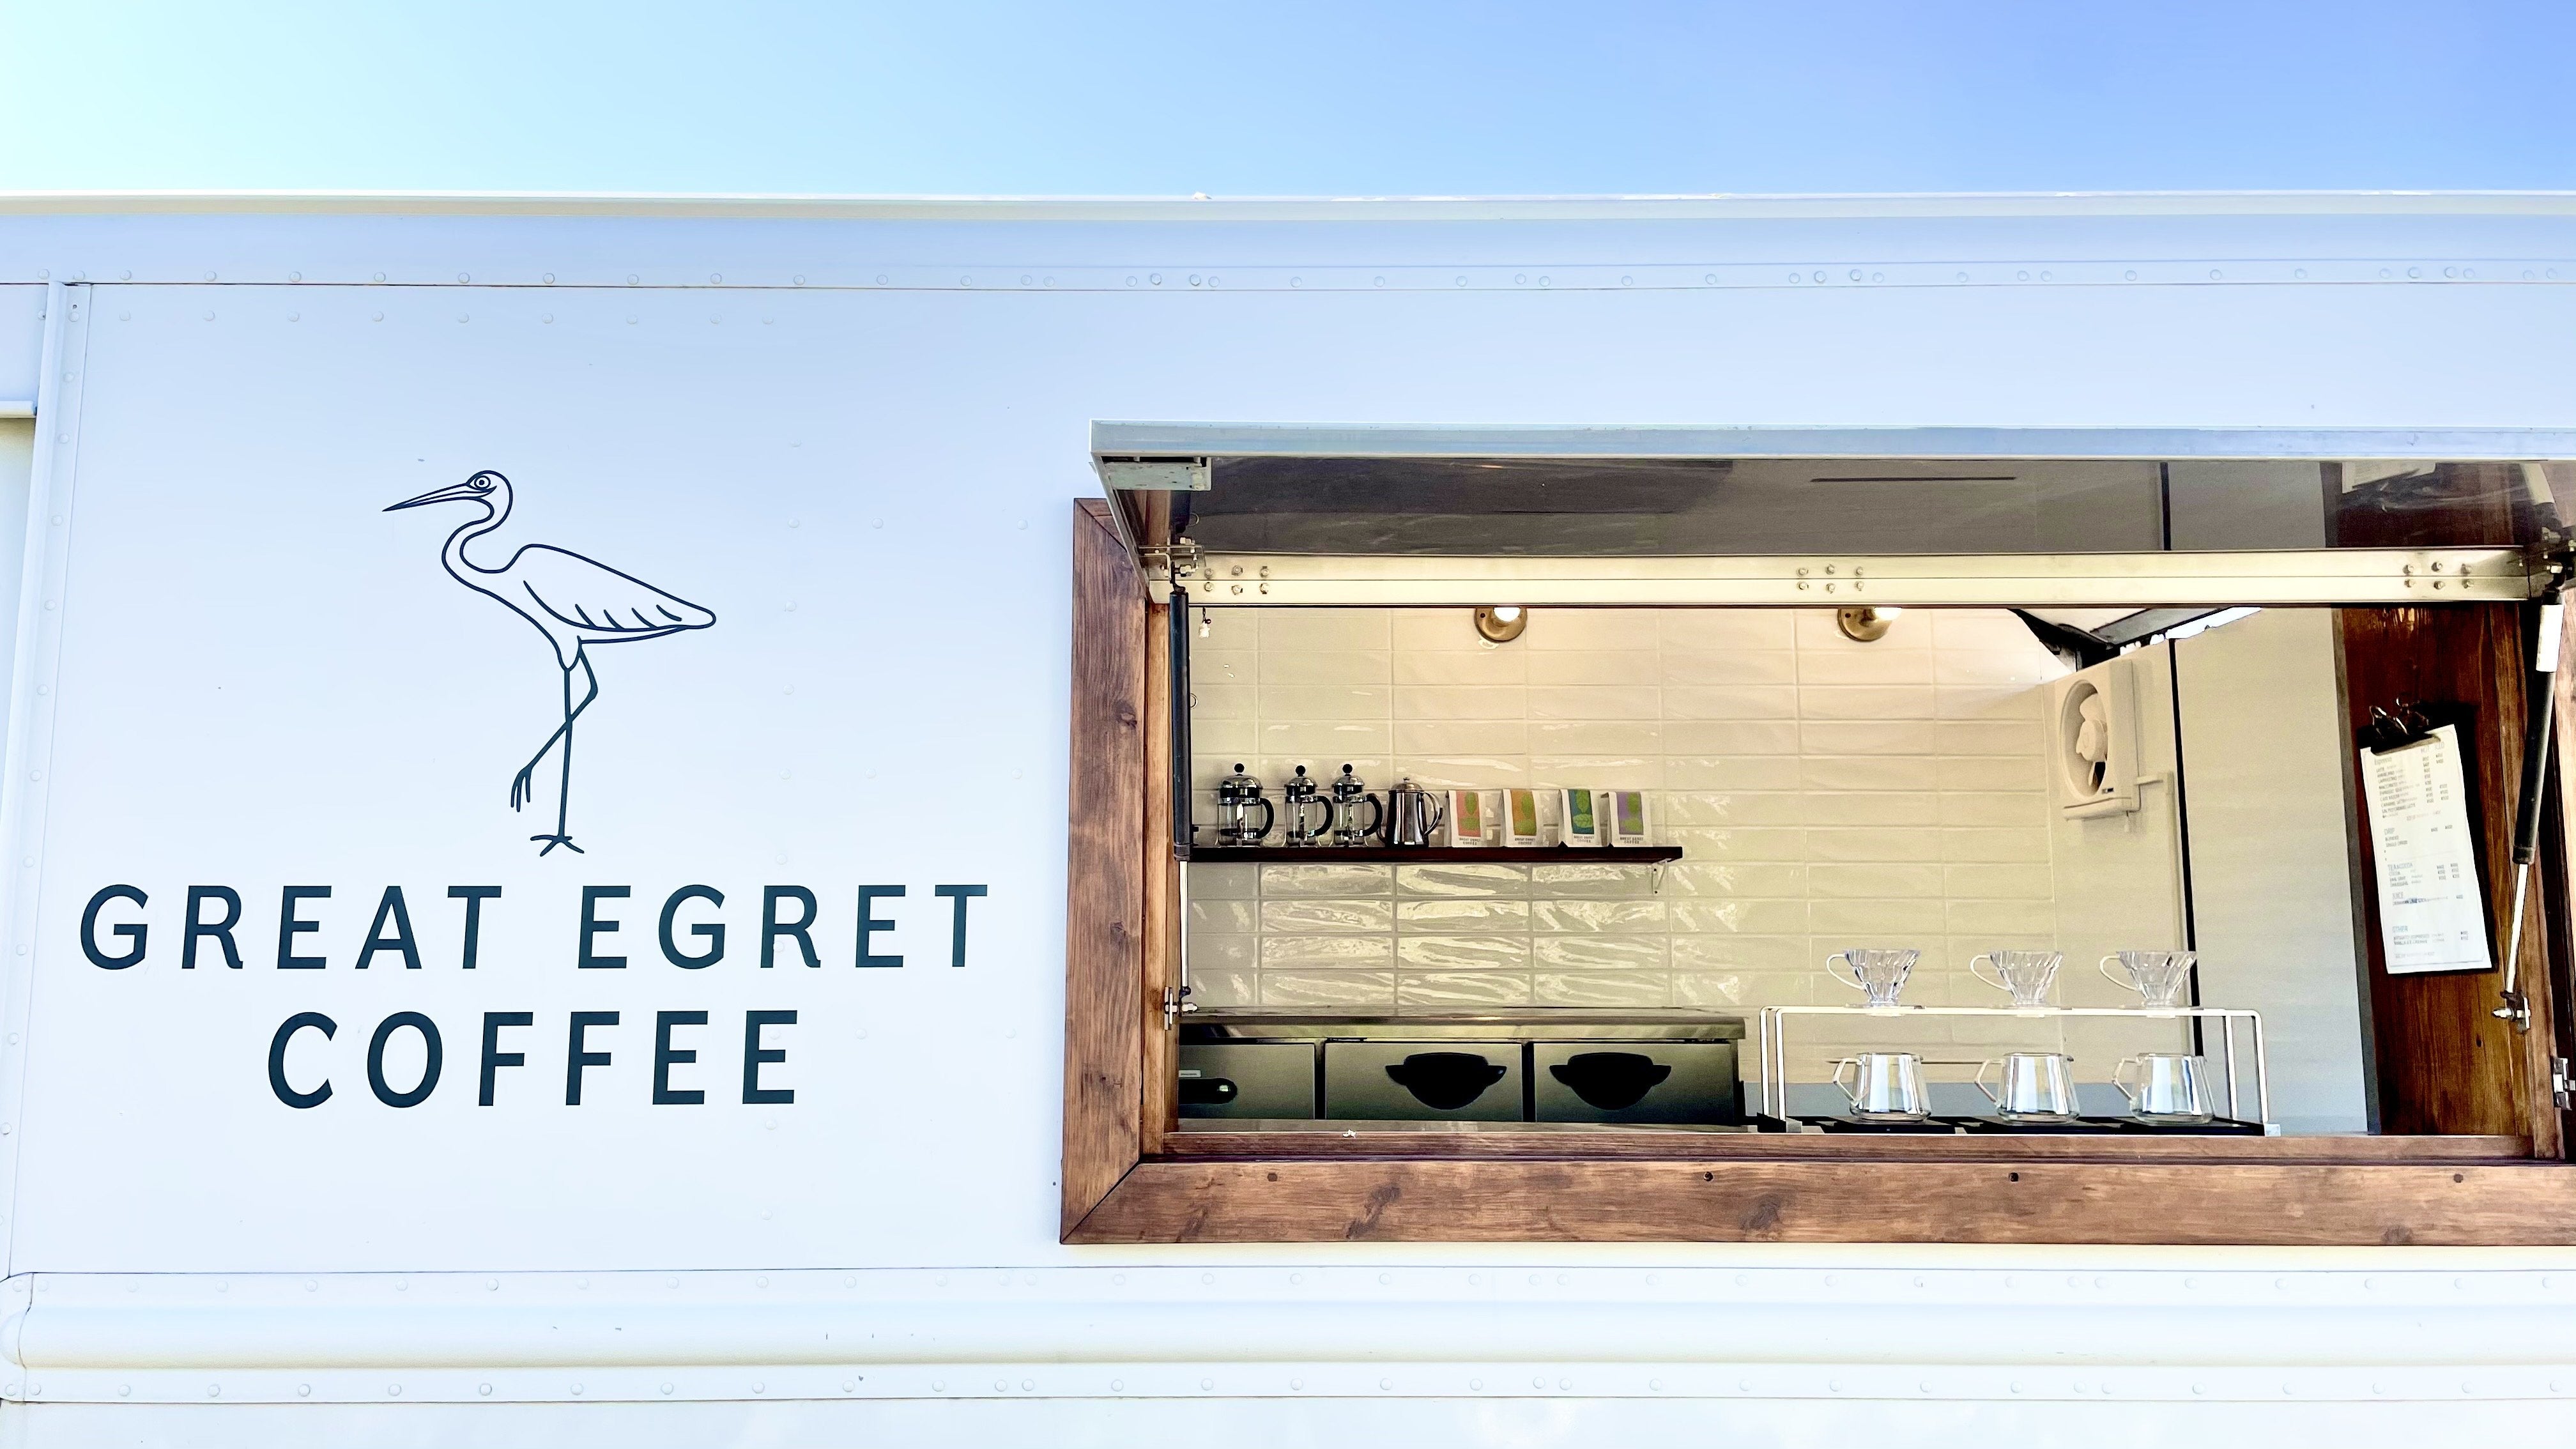 Great Egret Coffee